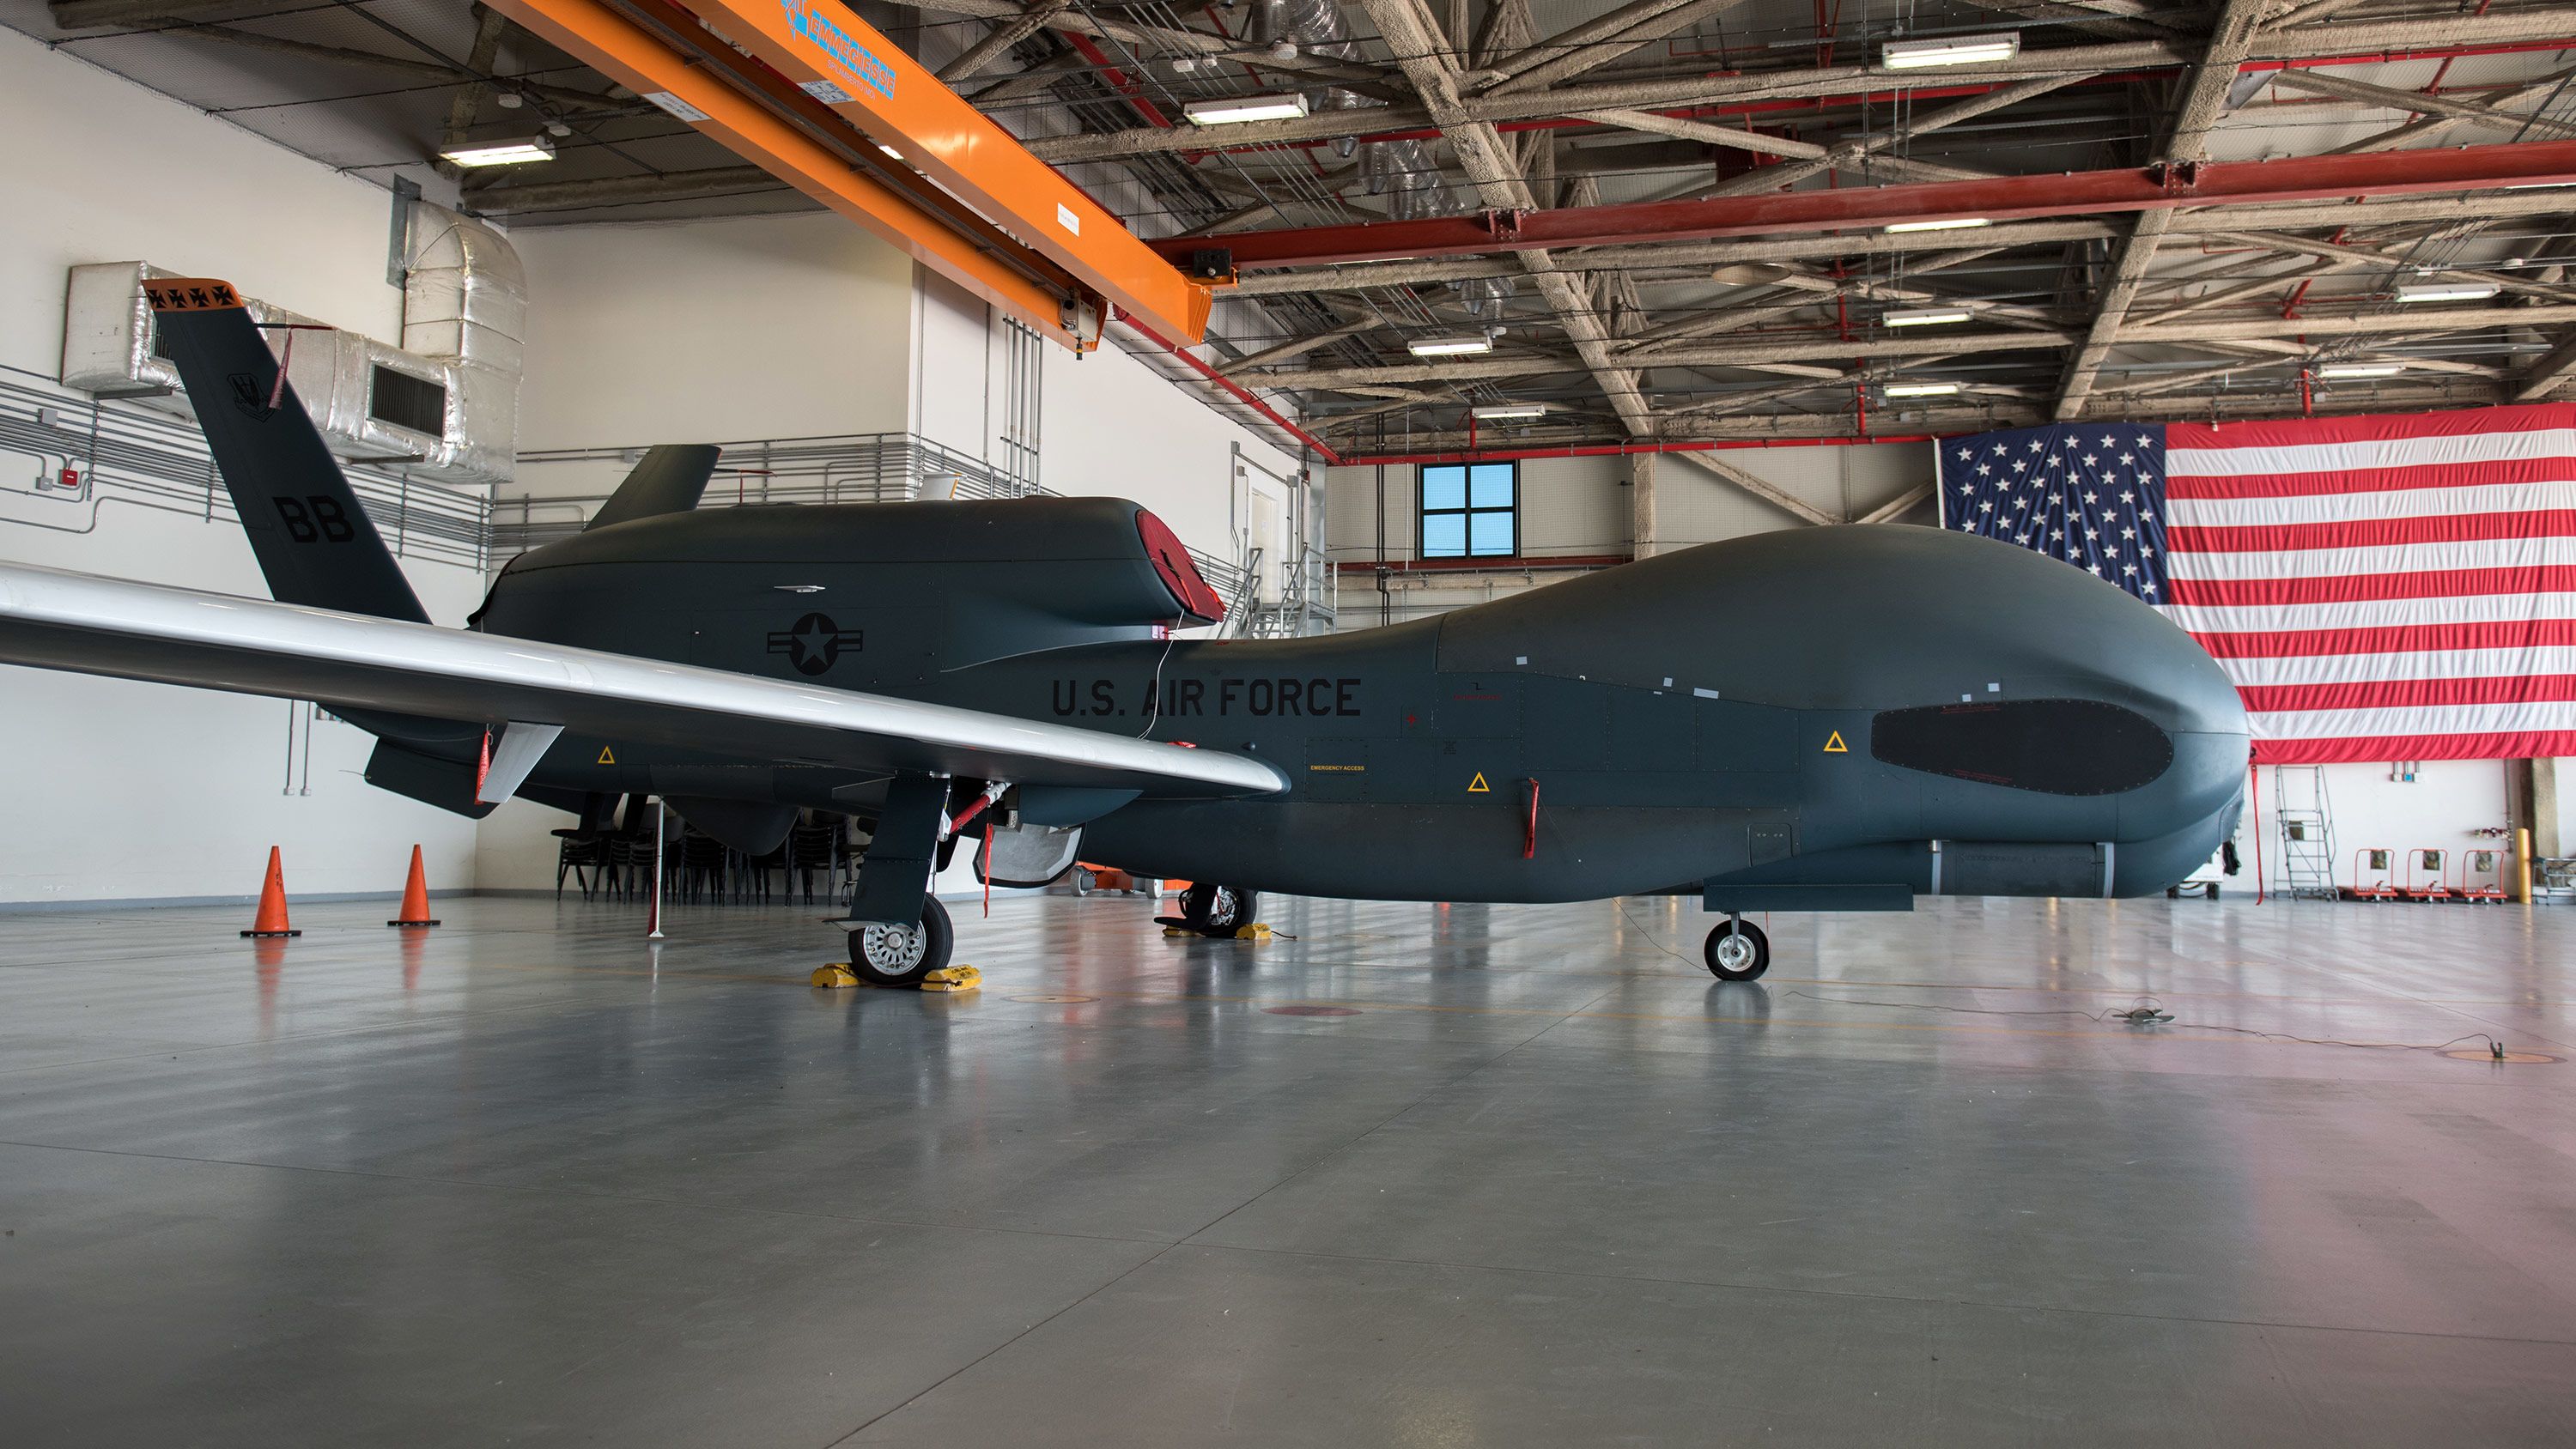 Global Hawk drone: The US military aircraft shot down by Iran | CNN